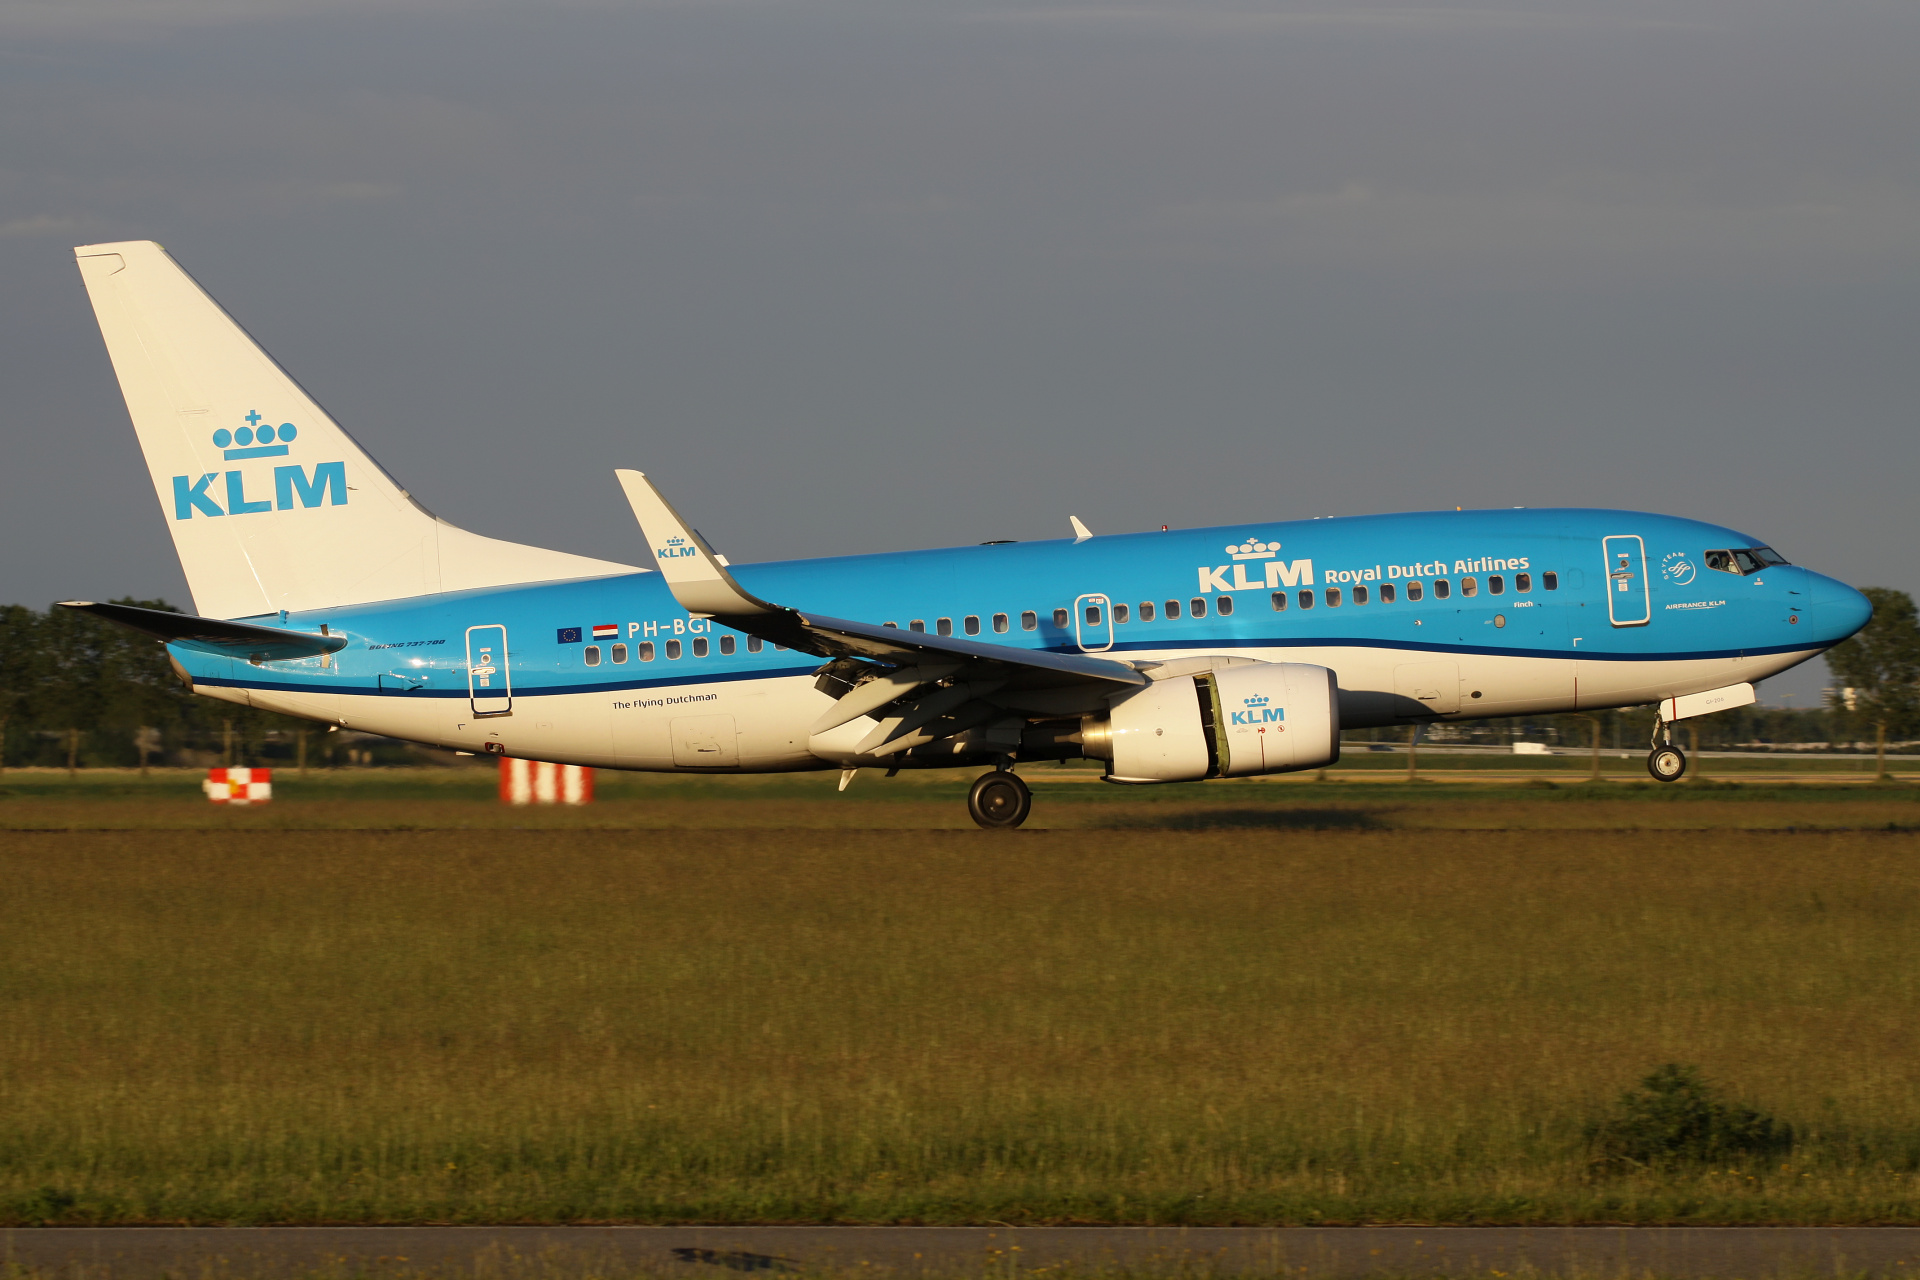 PH-BGI, KLM Royal Dutch Airlines (Aircraft » Schiphol Spotting » Boeing 737-700)